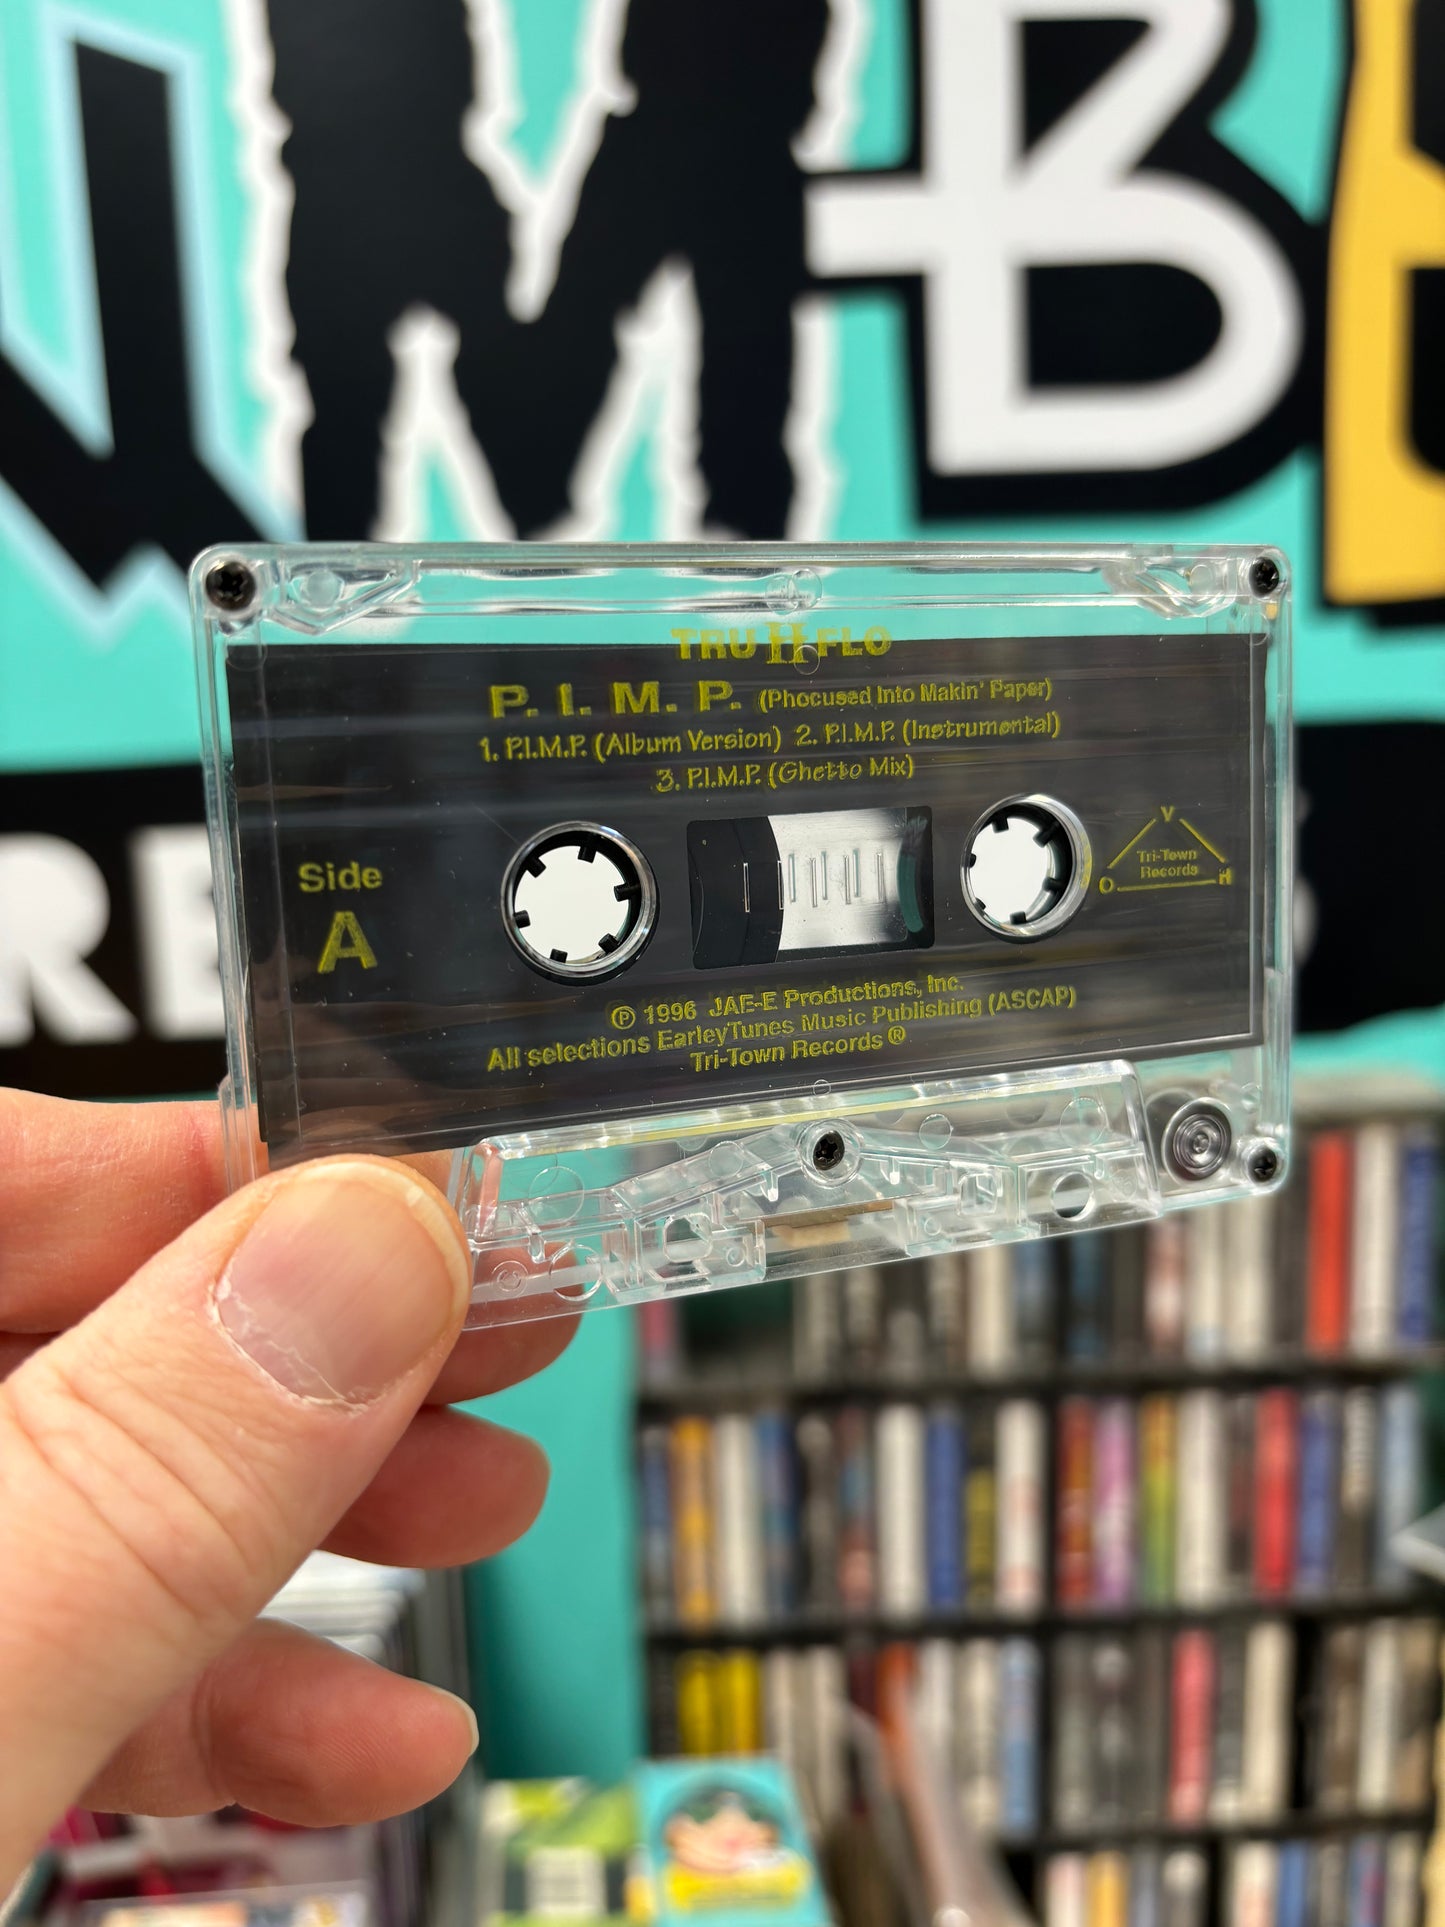 Tru II Flo: P.I.M.P. , C-cassette single, 1st pressing, US 1996